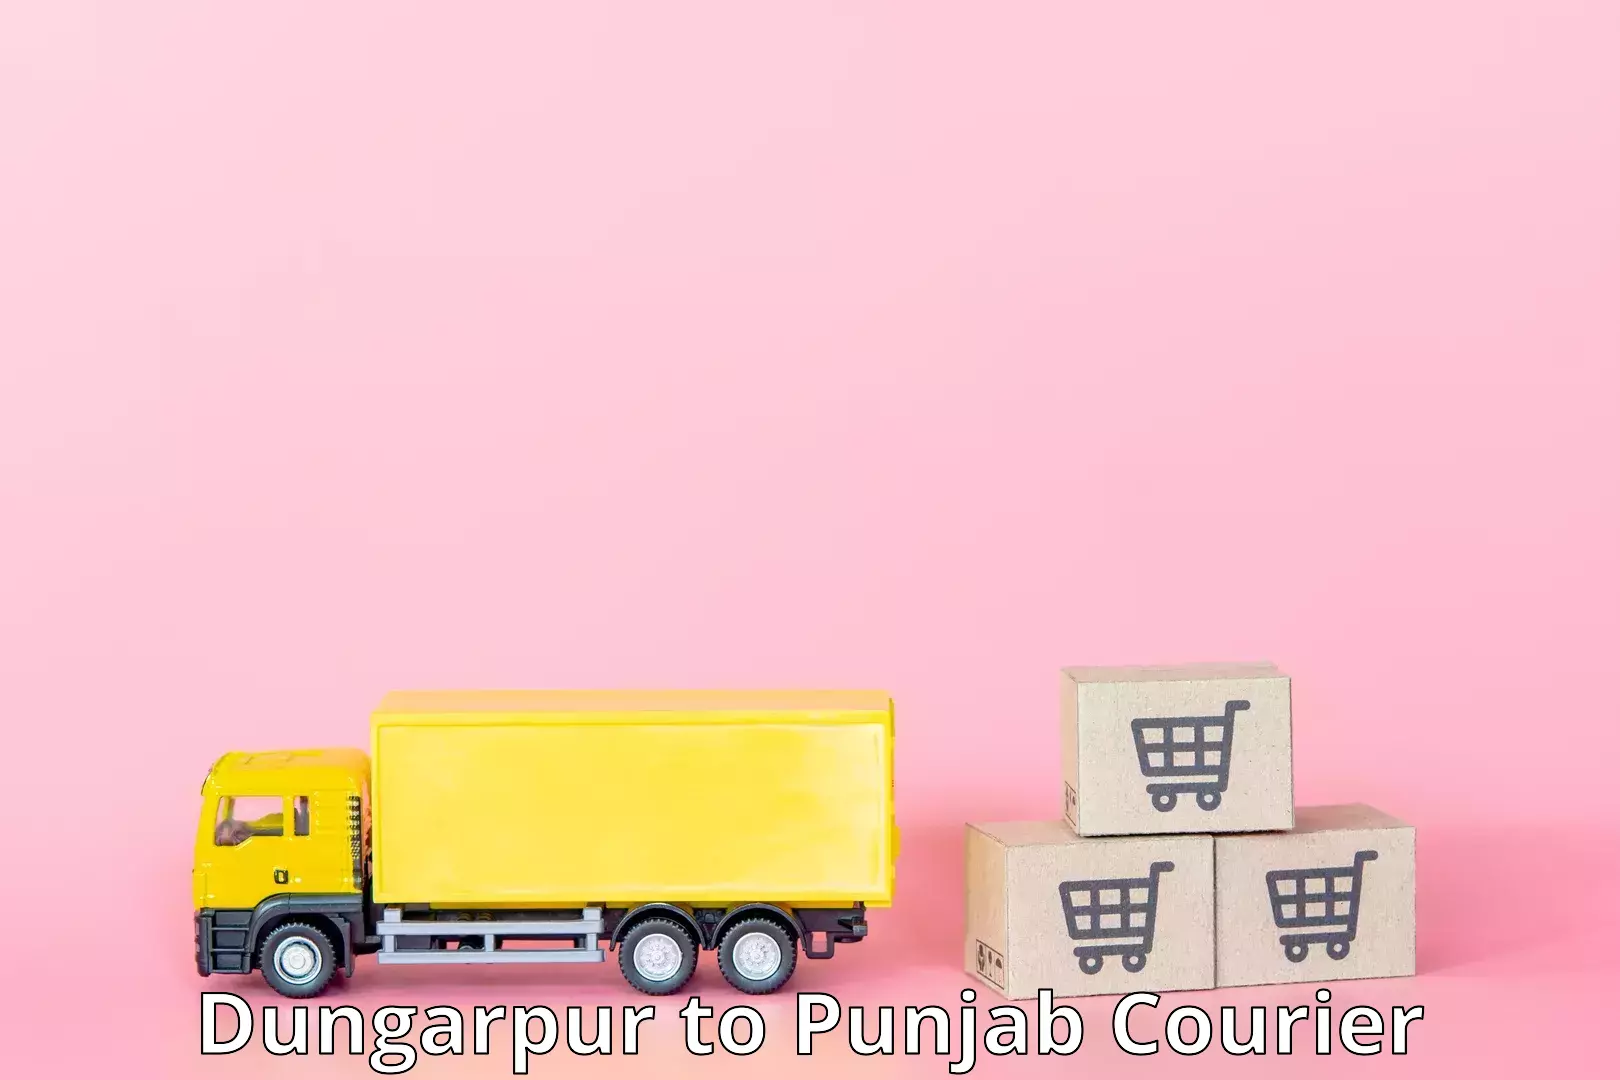 Courier service innovation Dungarpur to Punjab